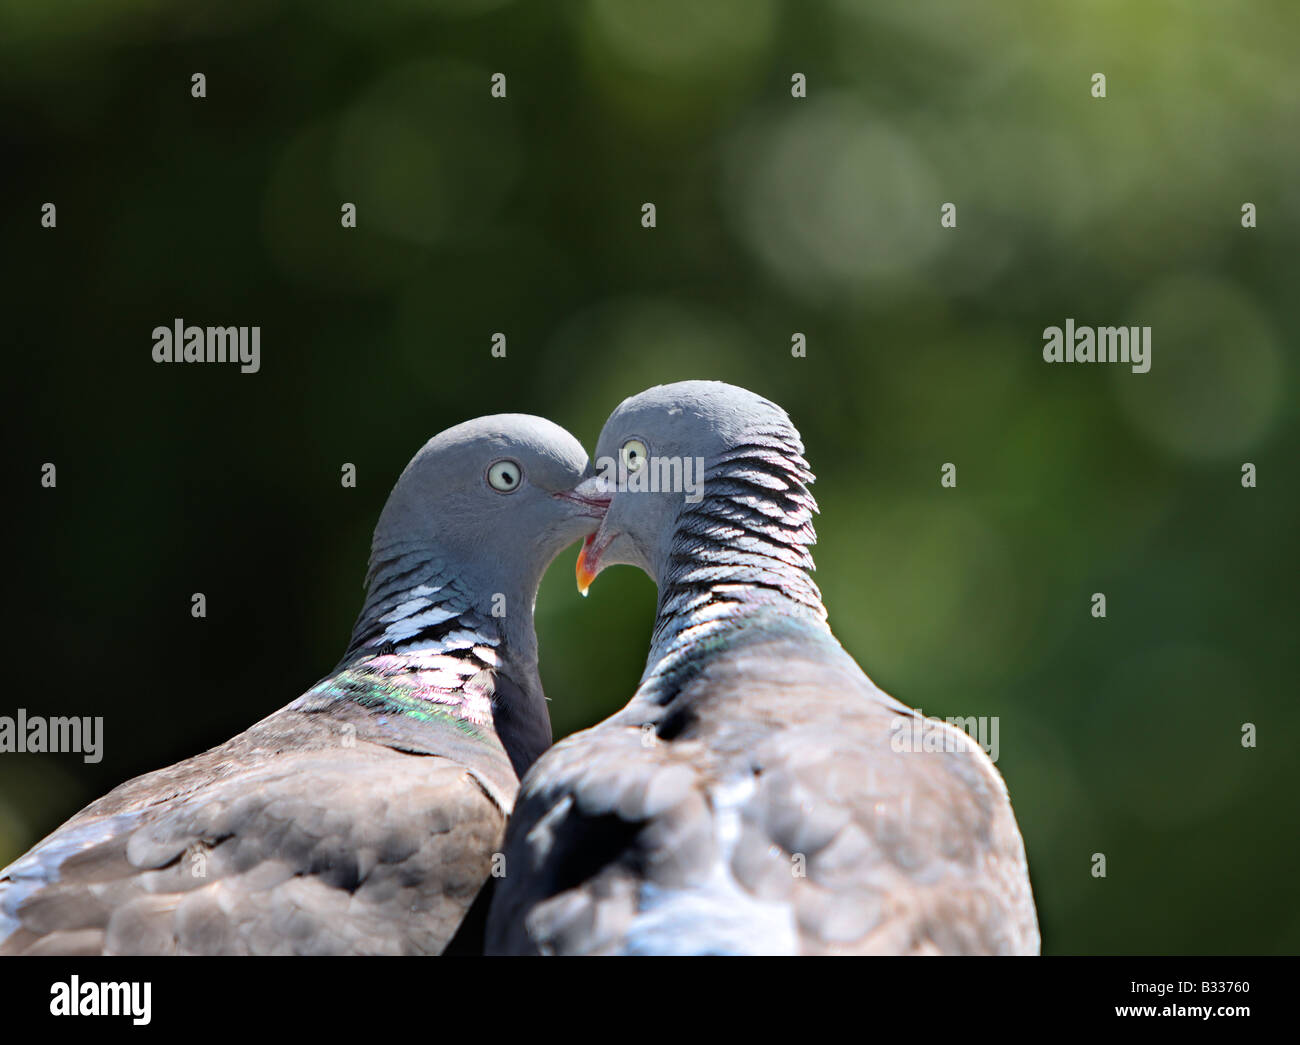 Wood pigeons, Columba palambus, courtship behaviour Stock Photo